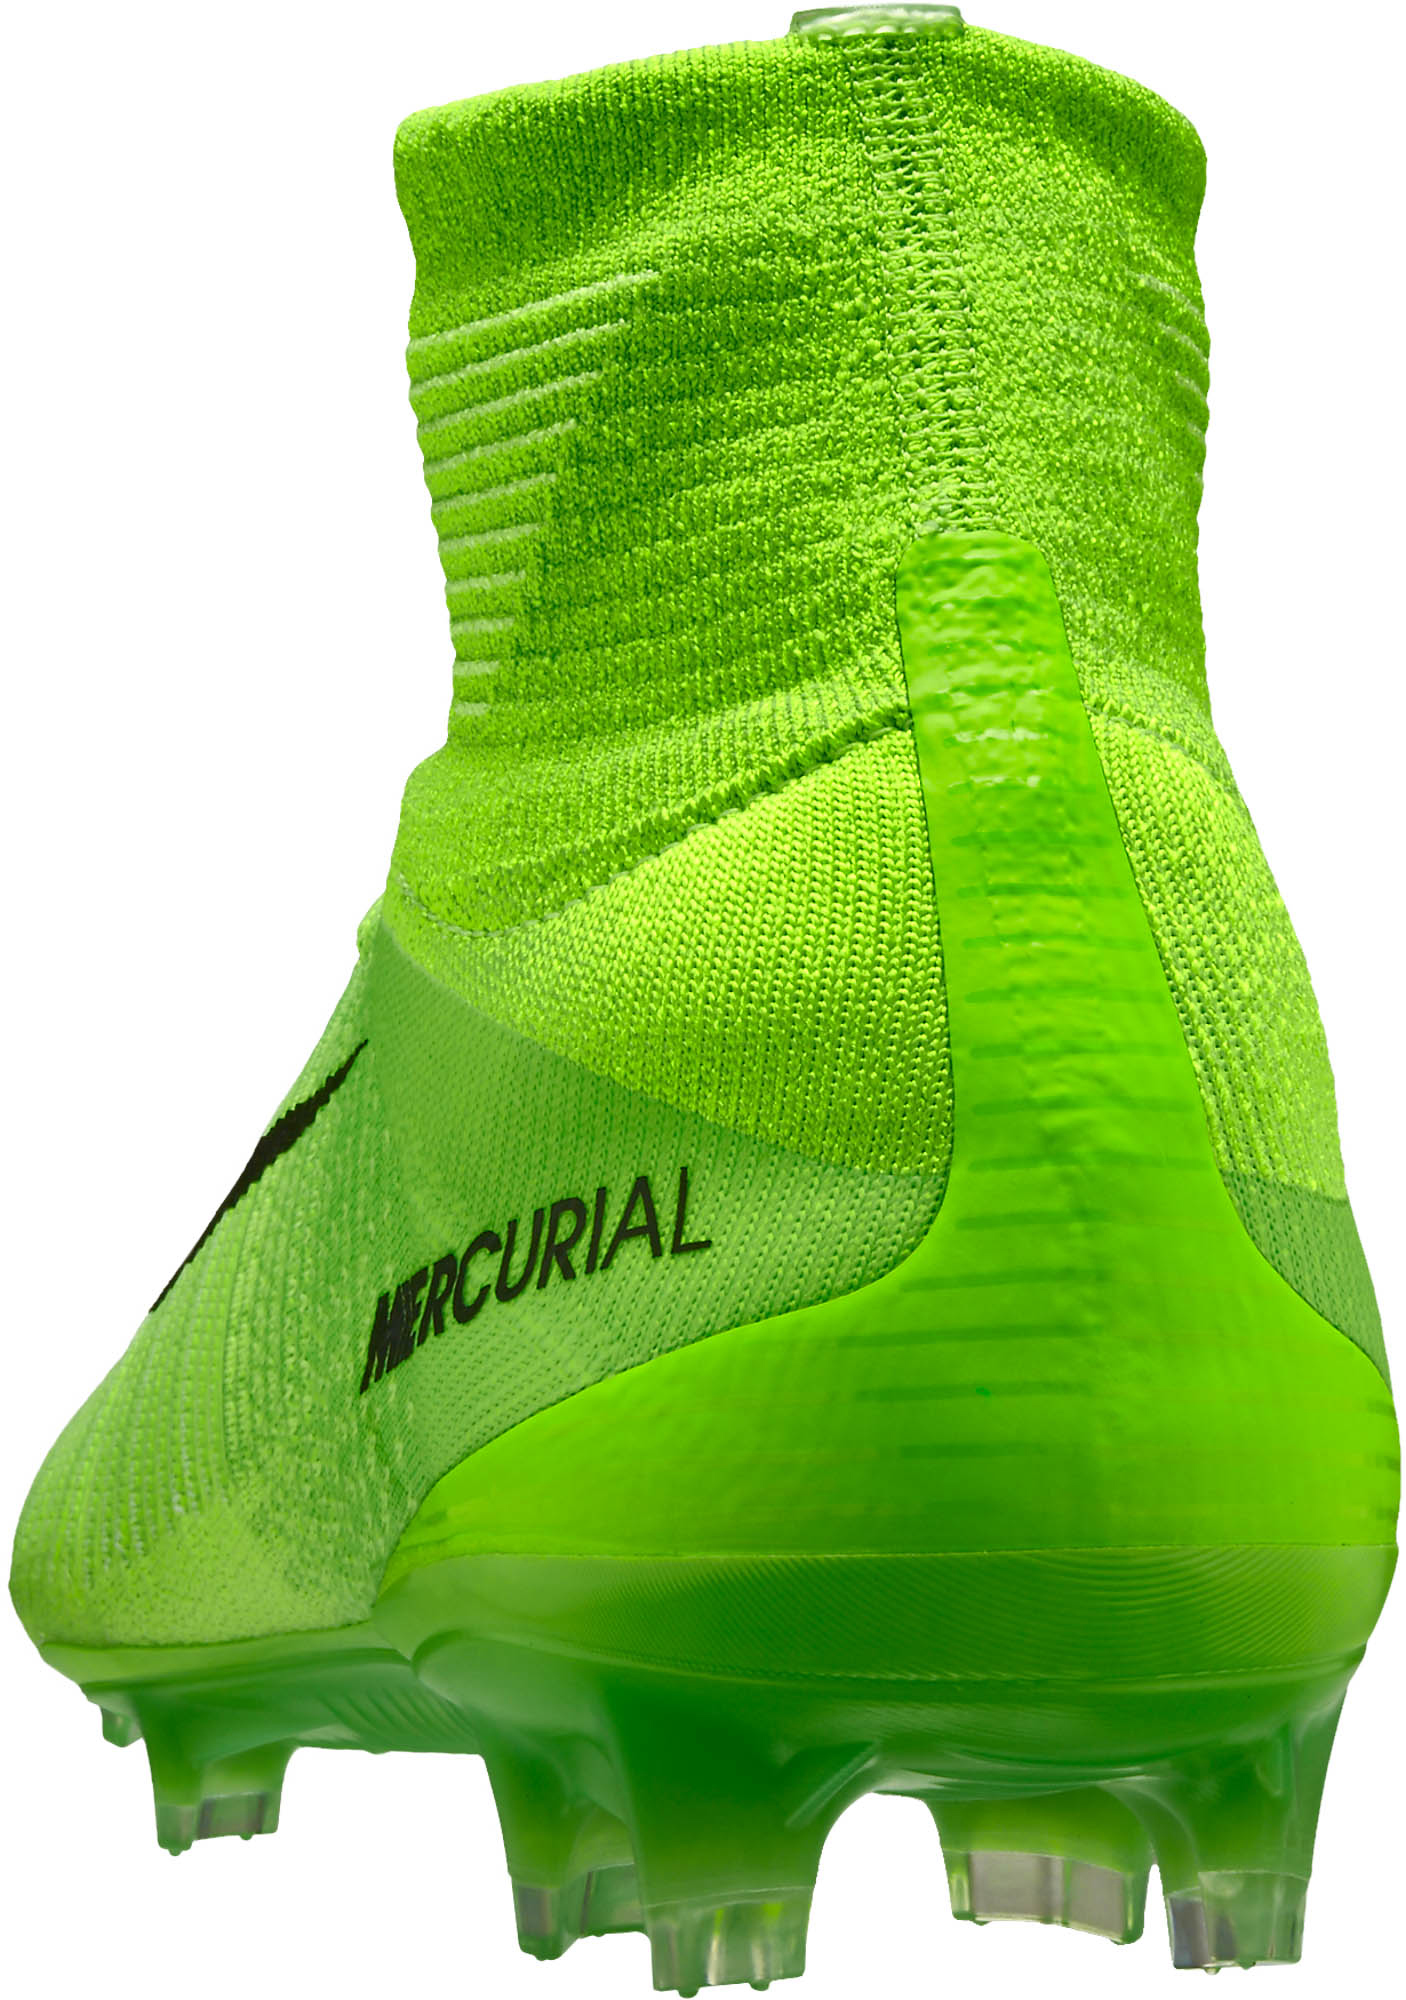 Aptitud Prevención orar Nike Mercurial Superfly V FG - Green Superfly Cleats